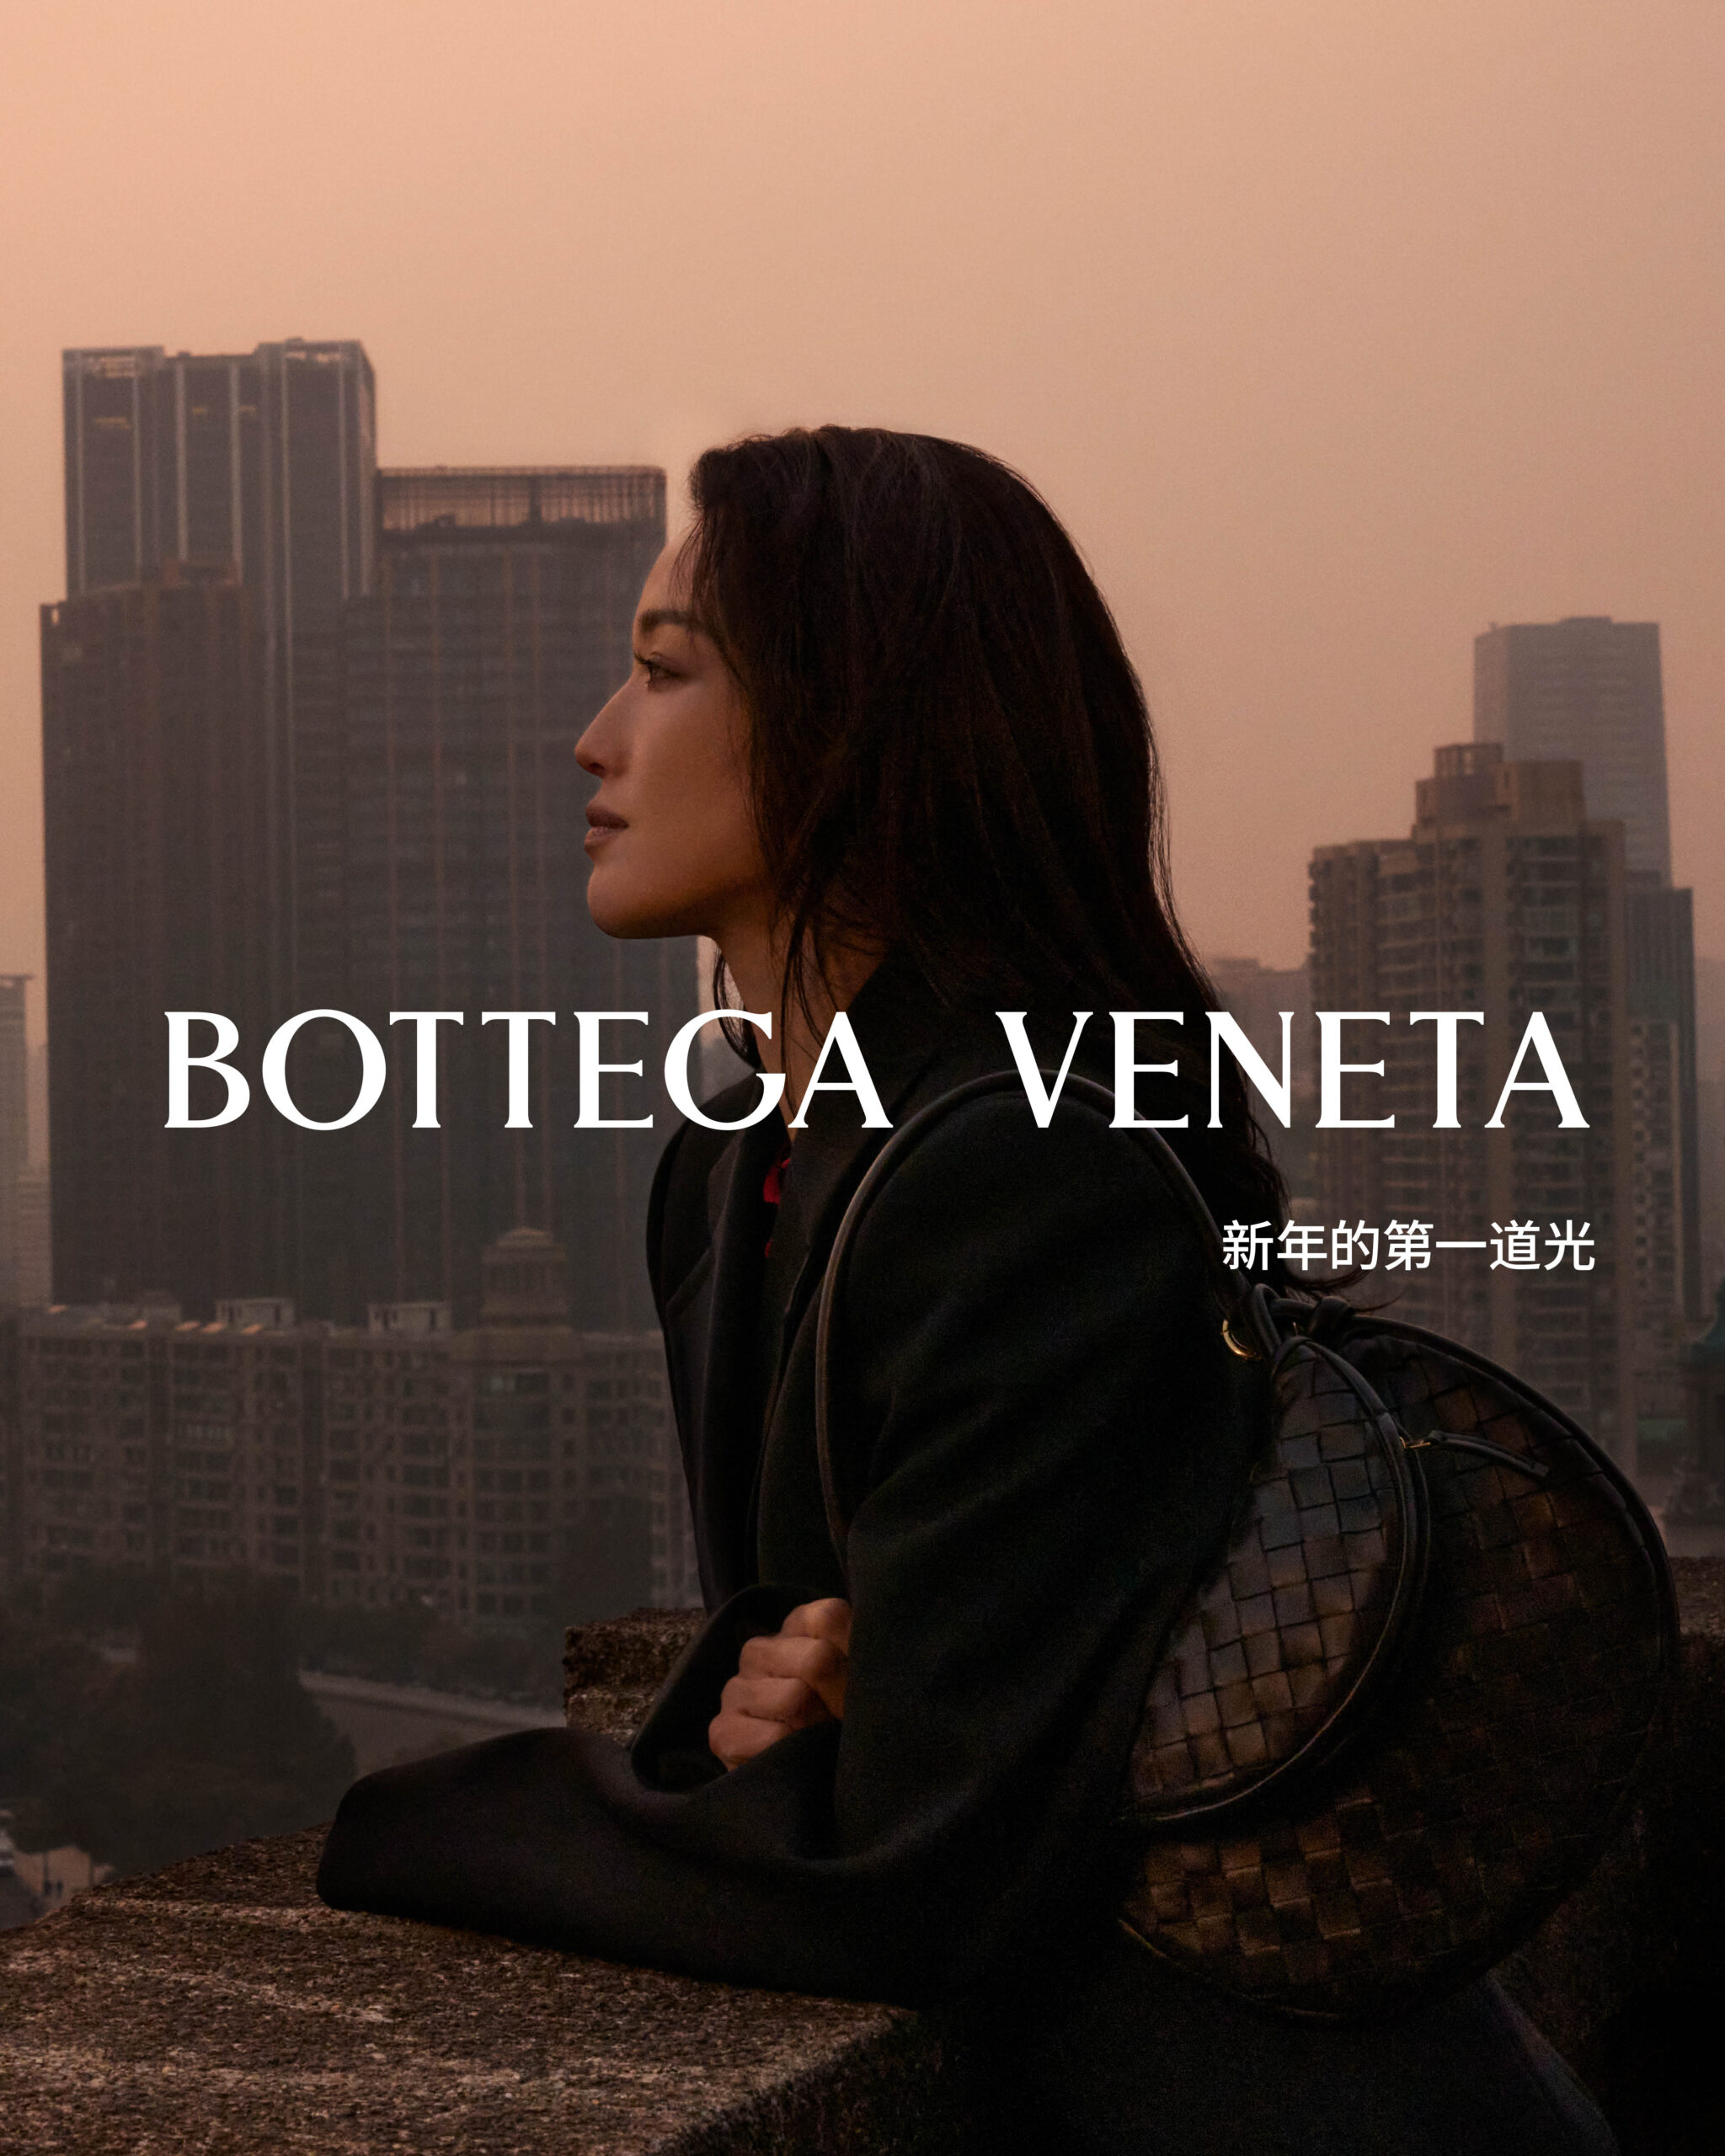 Bottega Veneta Collaborates with Jess Zou on a Chinese New Year Short Film